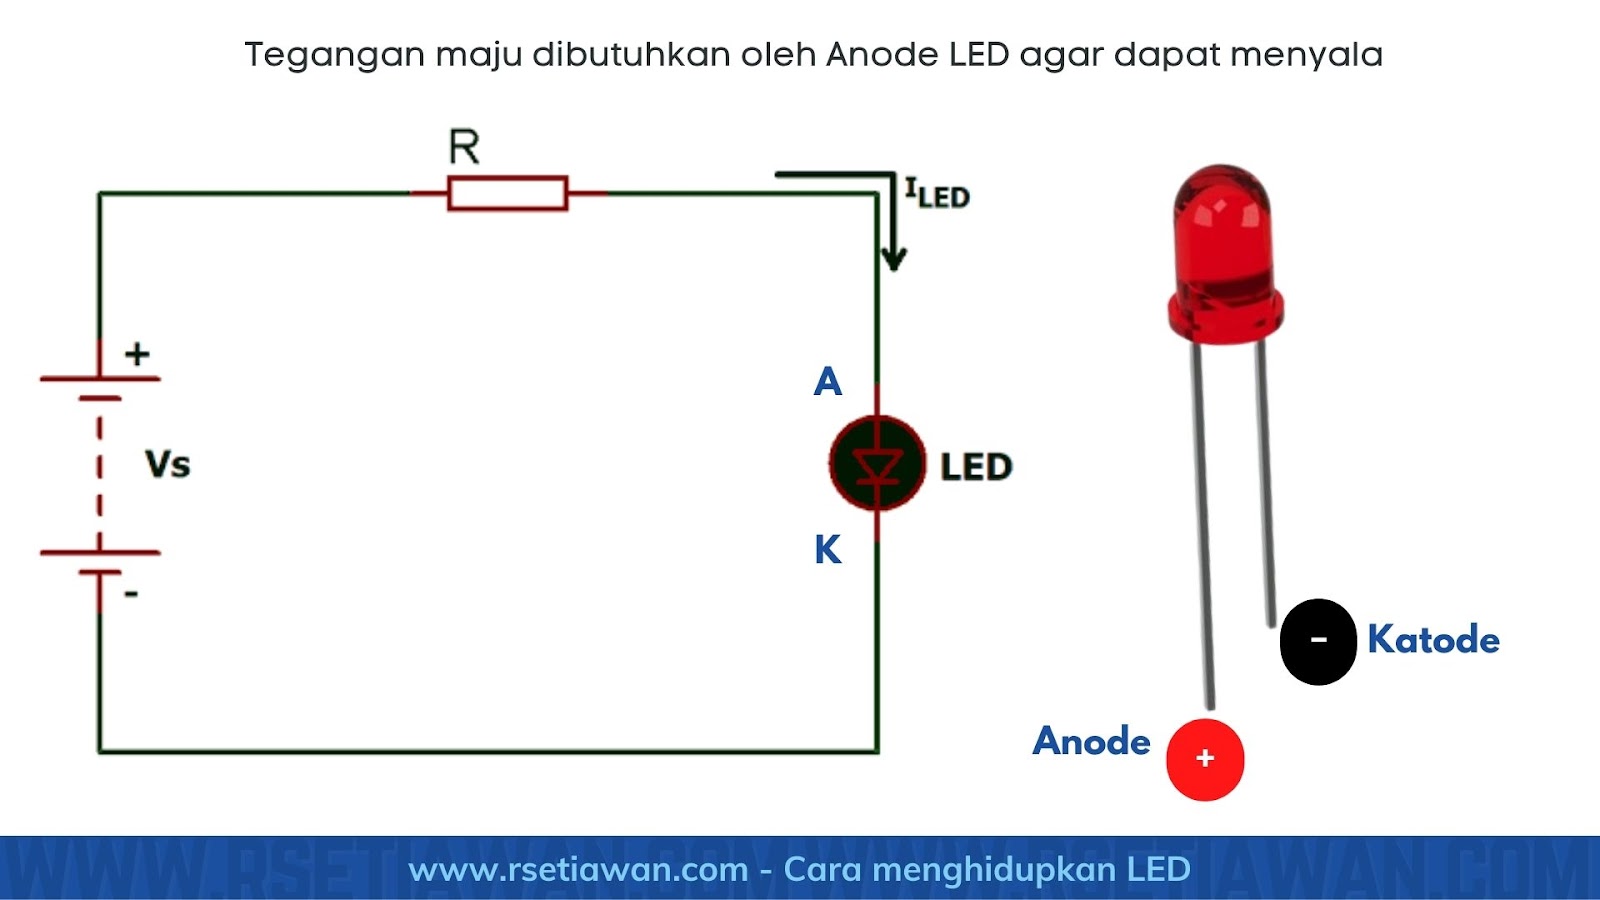 Cara menyalakan LED